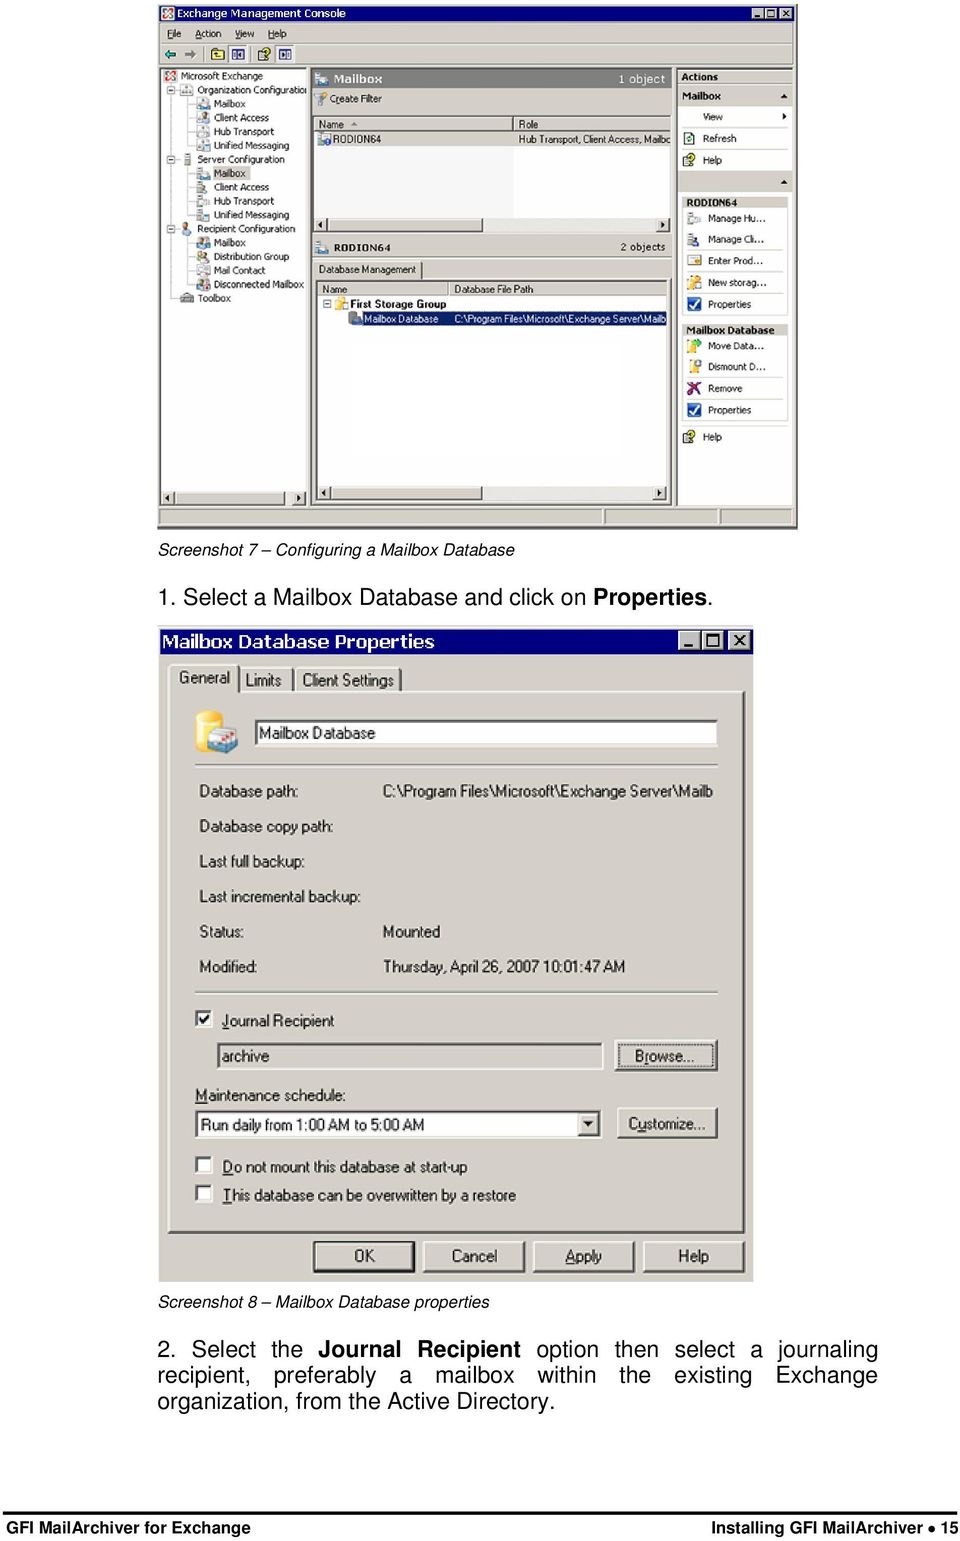 Screenshot 8 Mailbox Database properties 2.